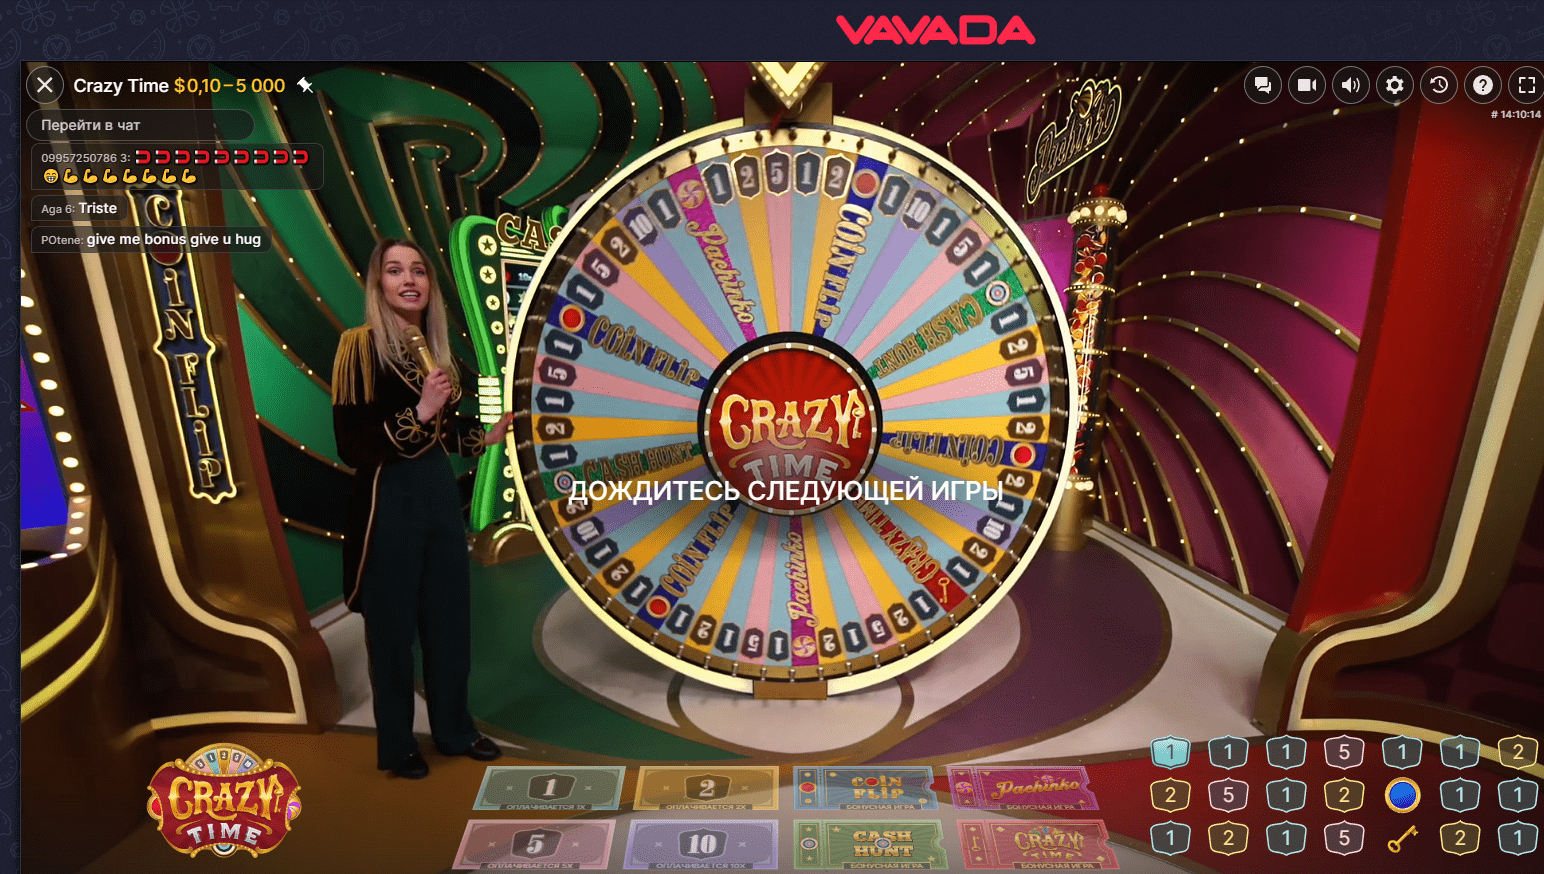 gioco crazy time at Vavada casino